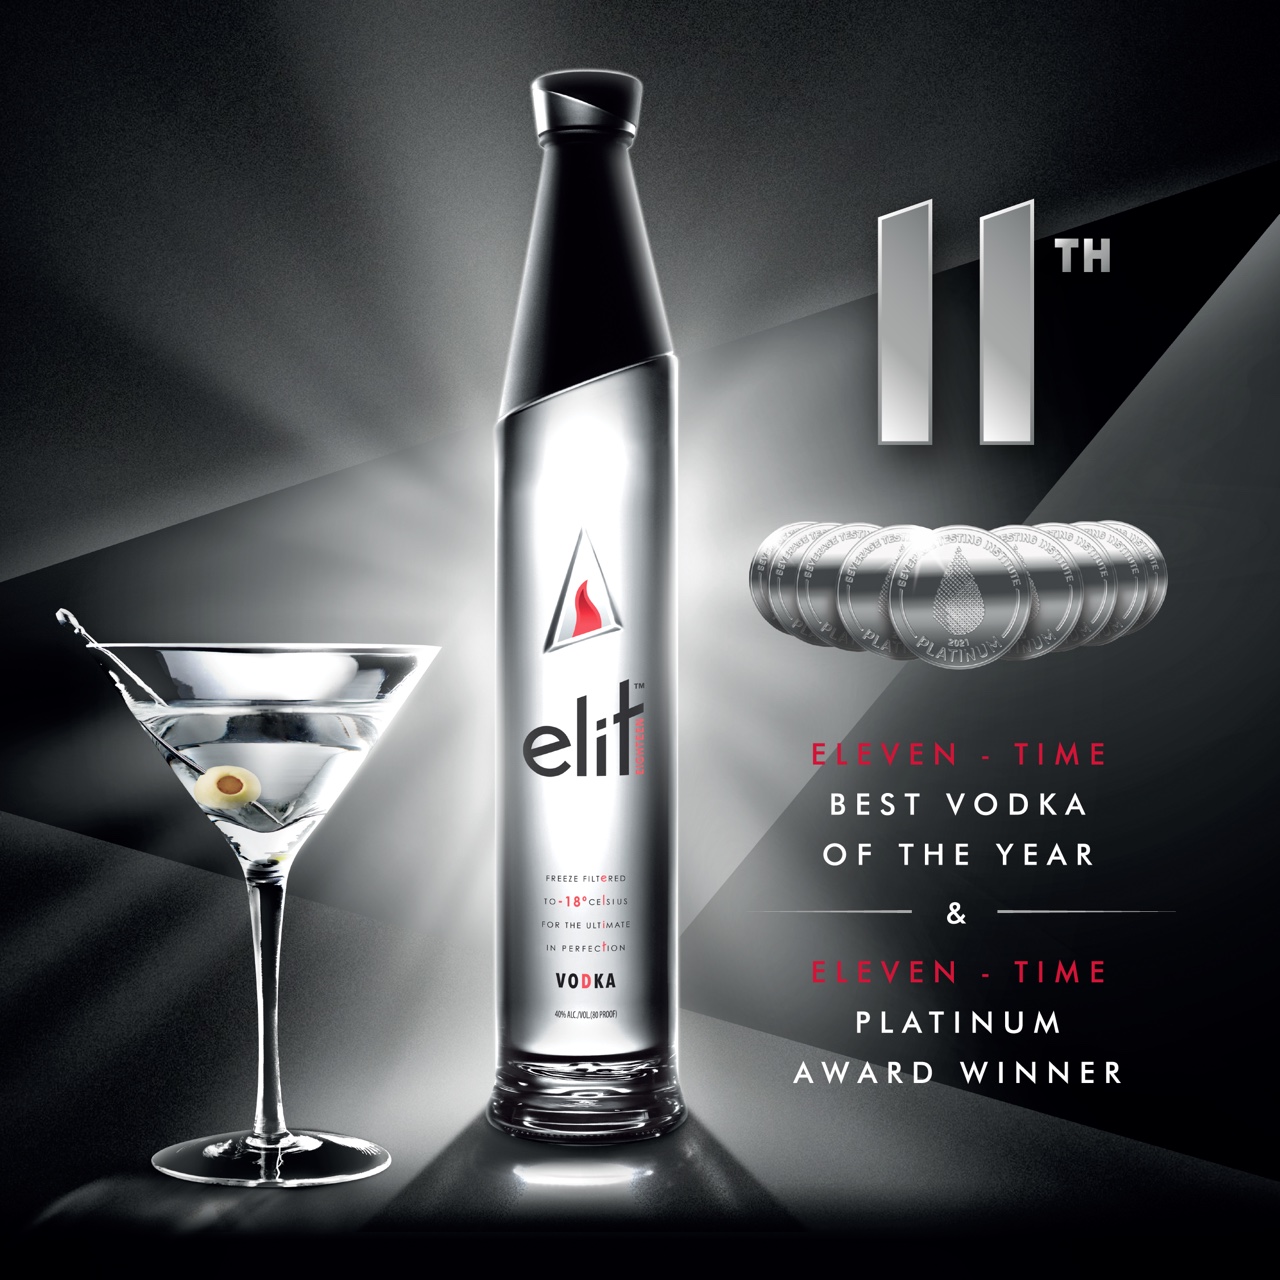 Elit Vodka wins 'Best Vodka of the Year' at Beverage Tasting Institute